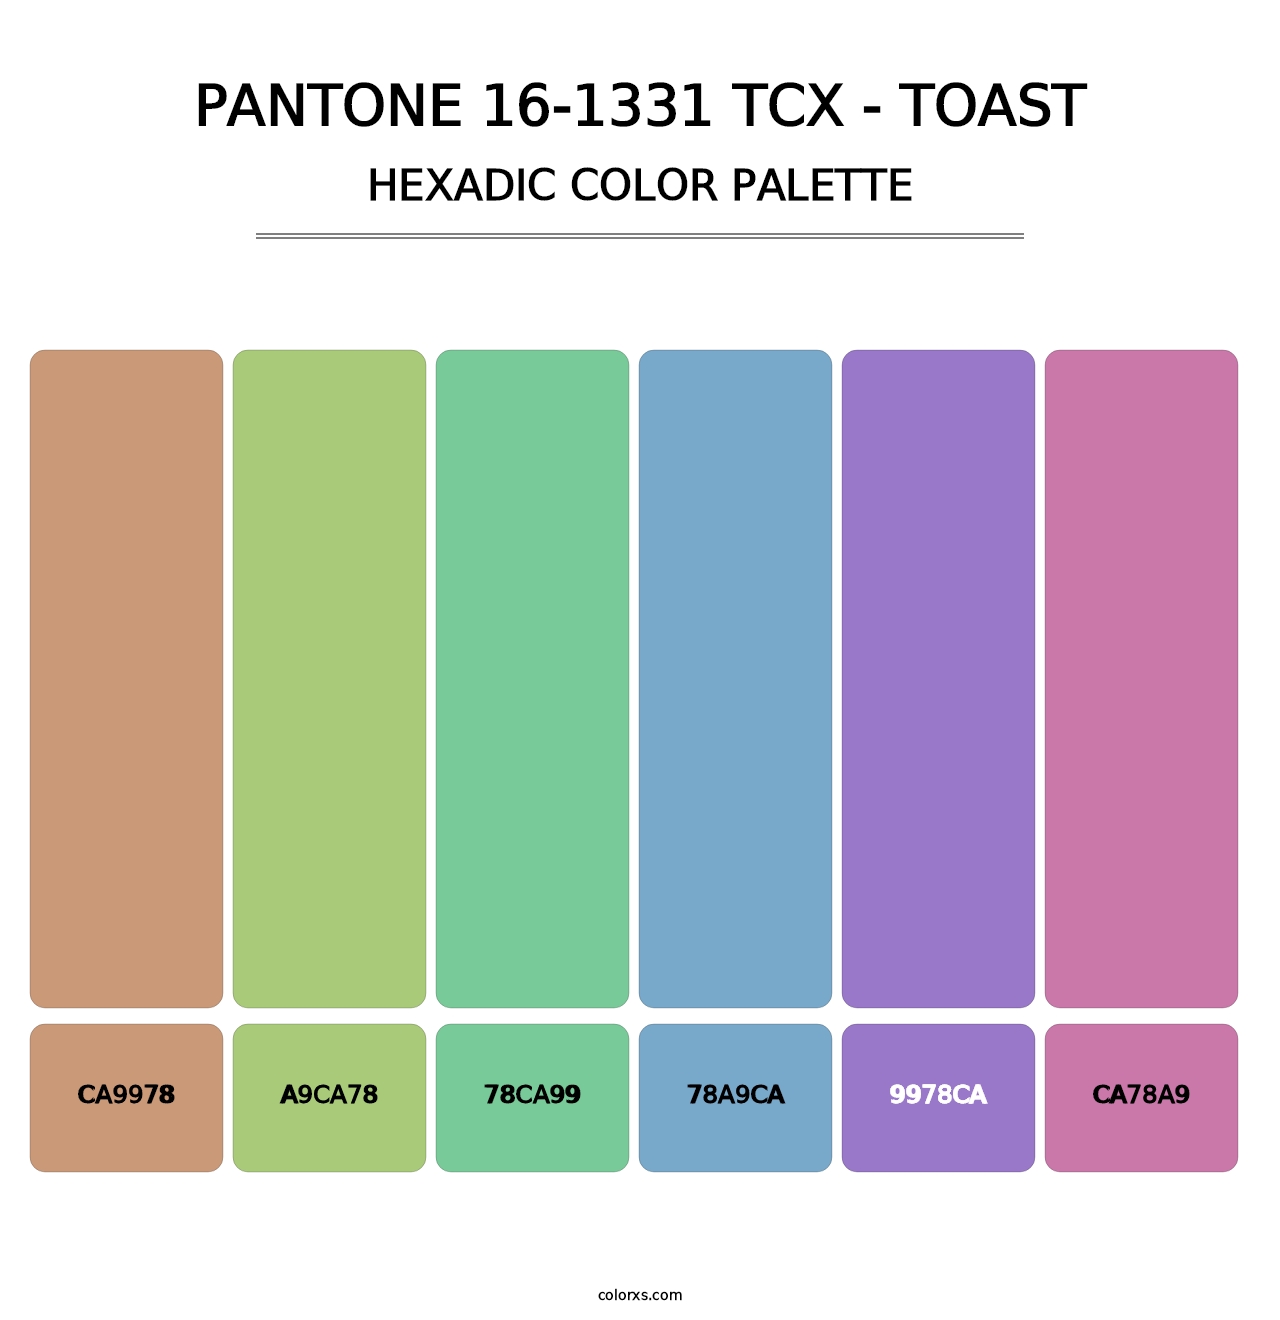 PANTONE 16-1331 TCX - Toast - Hexadic Color Palette